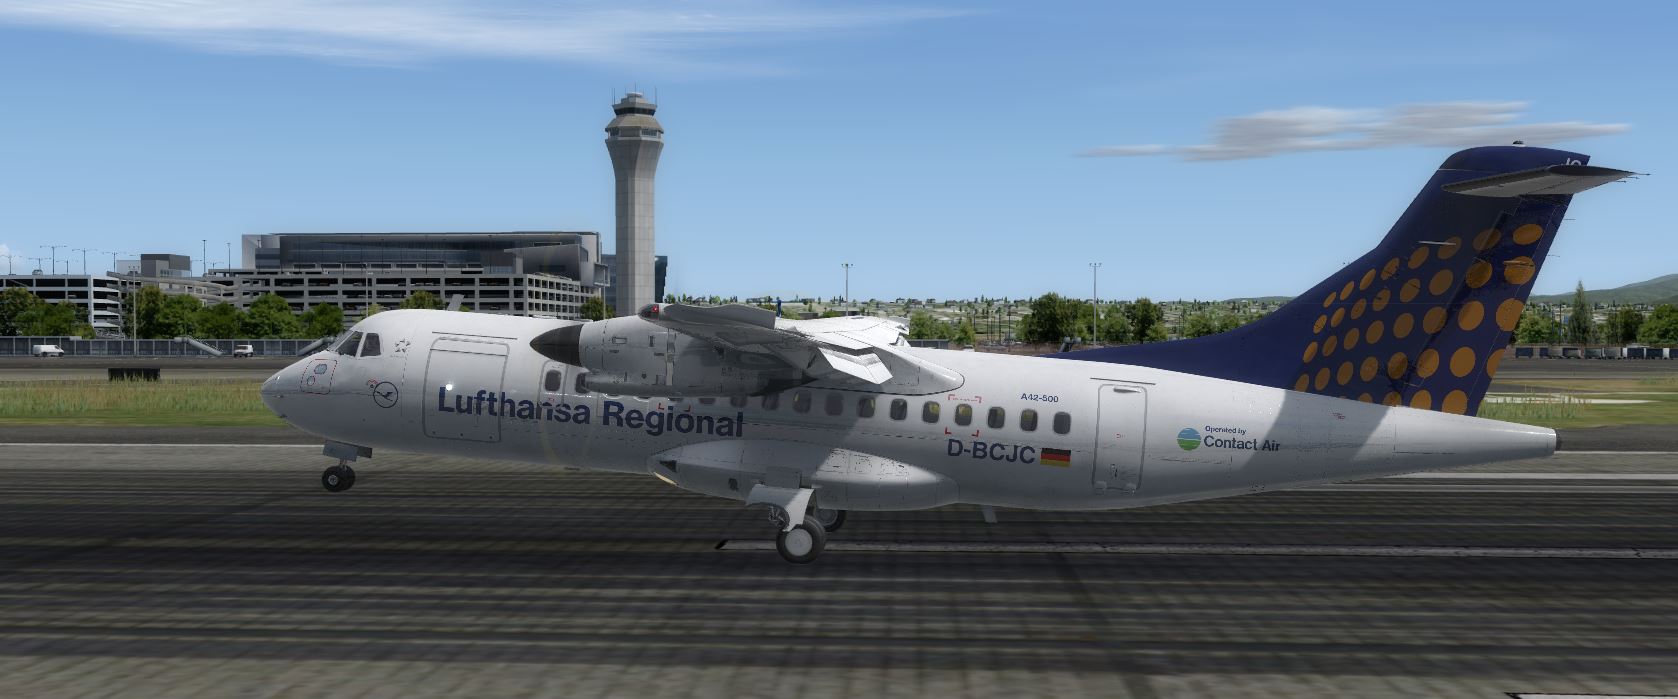 ATR42-500 Lufthansa-5600 